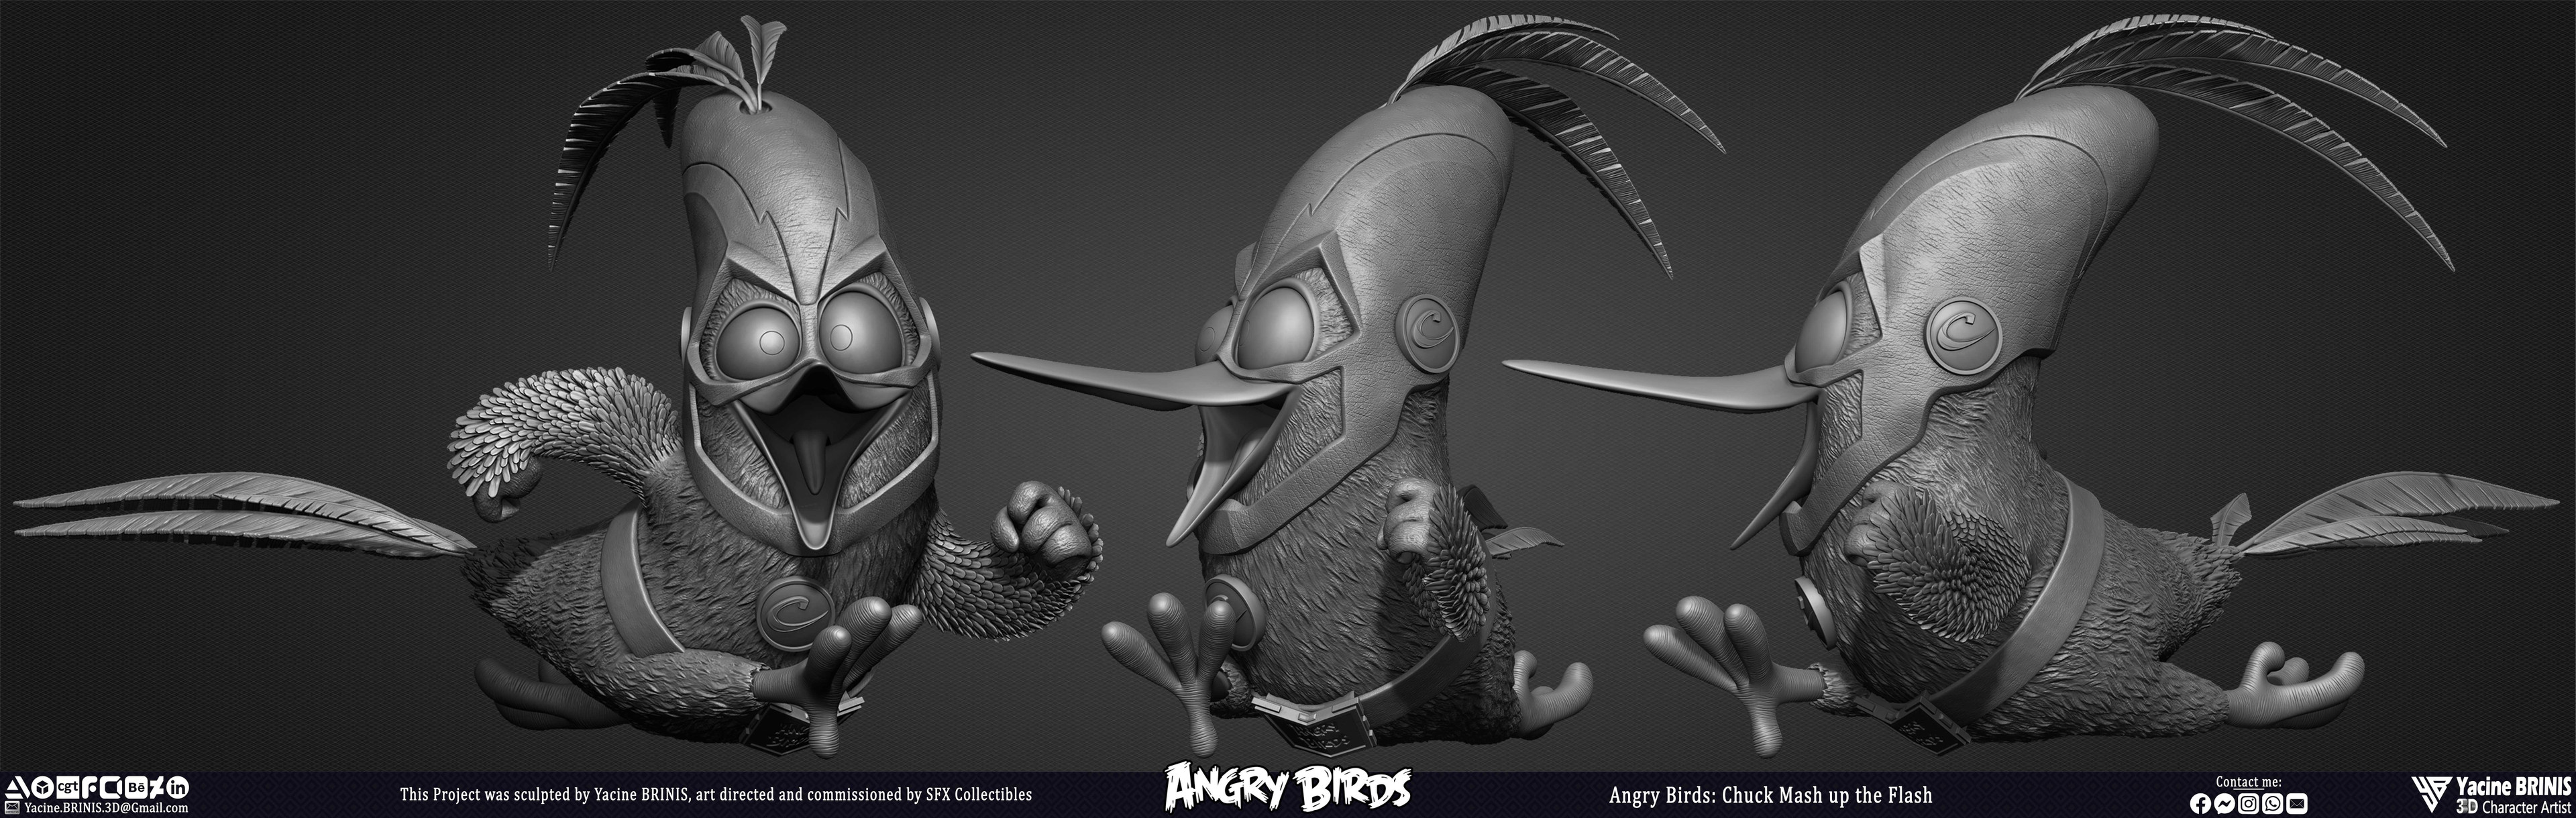 Chuck Running The Flash Angry Birds Movie 02 Rovio sculpted by Yacine BRINIS 003